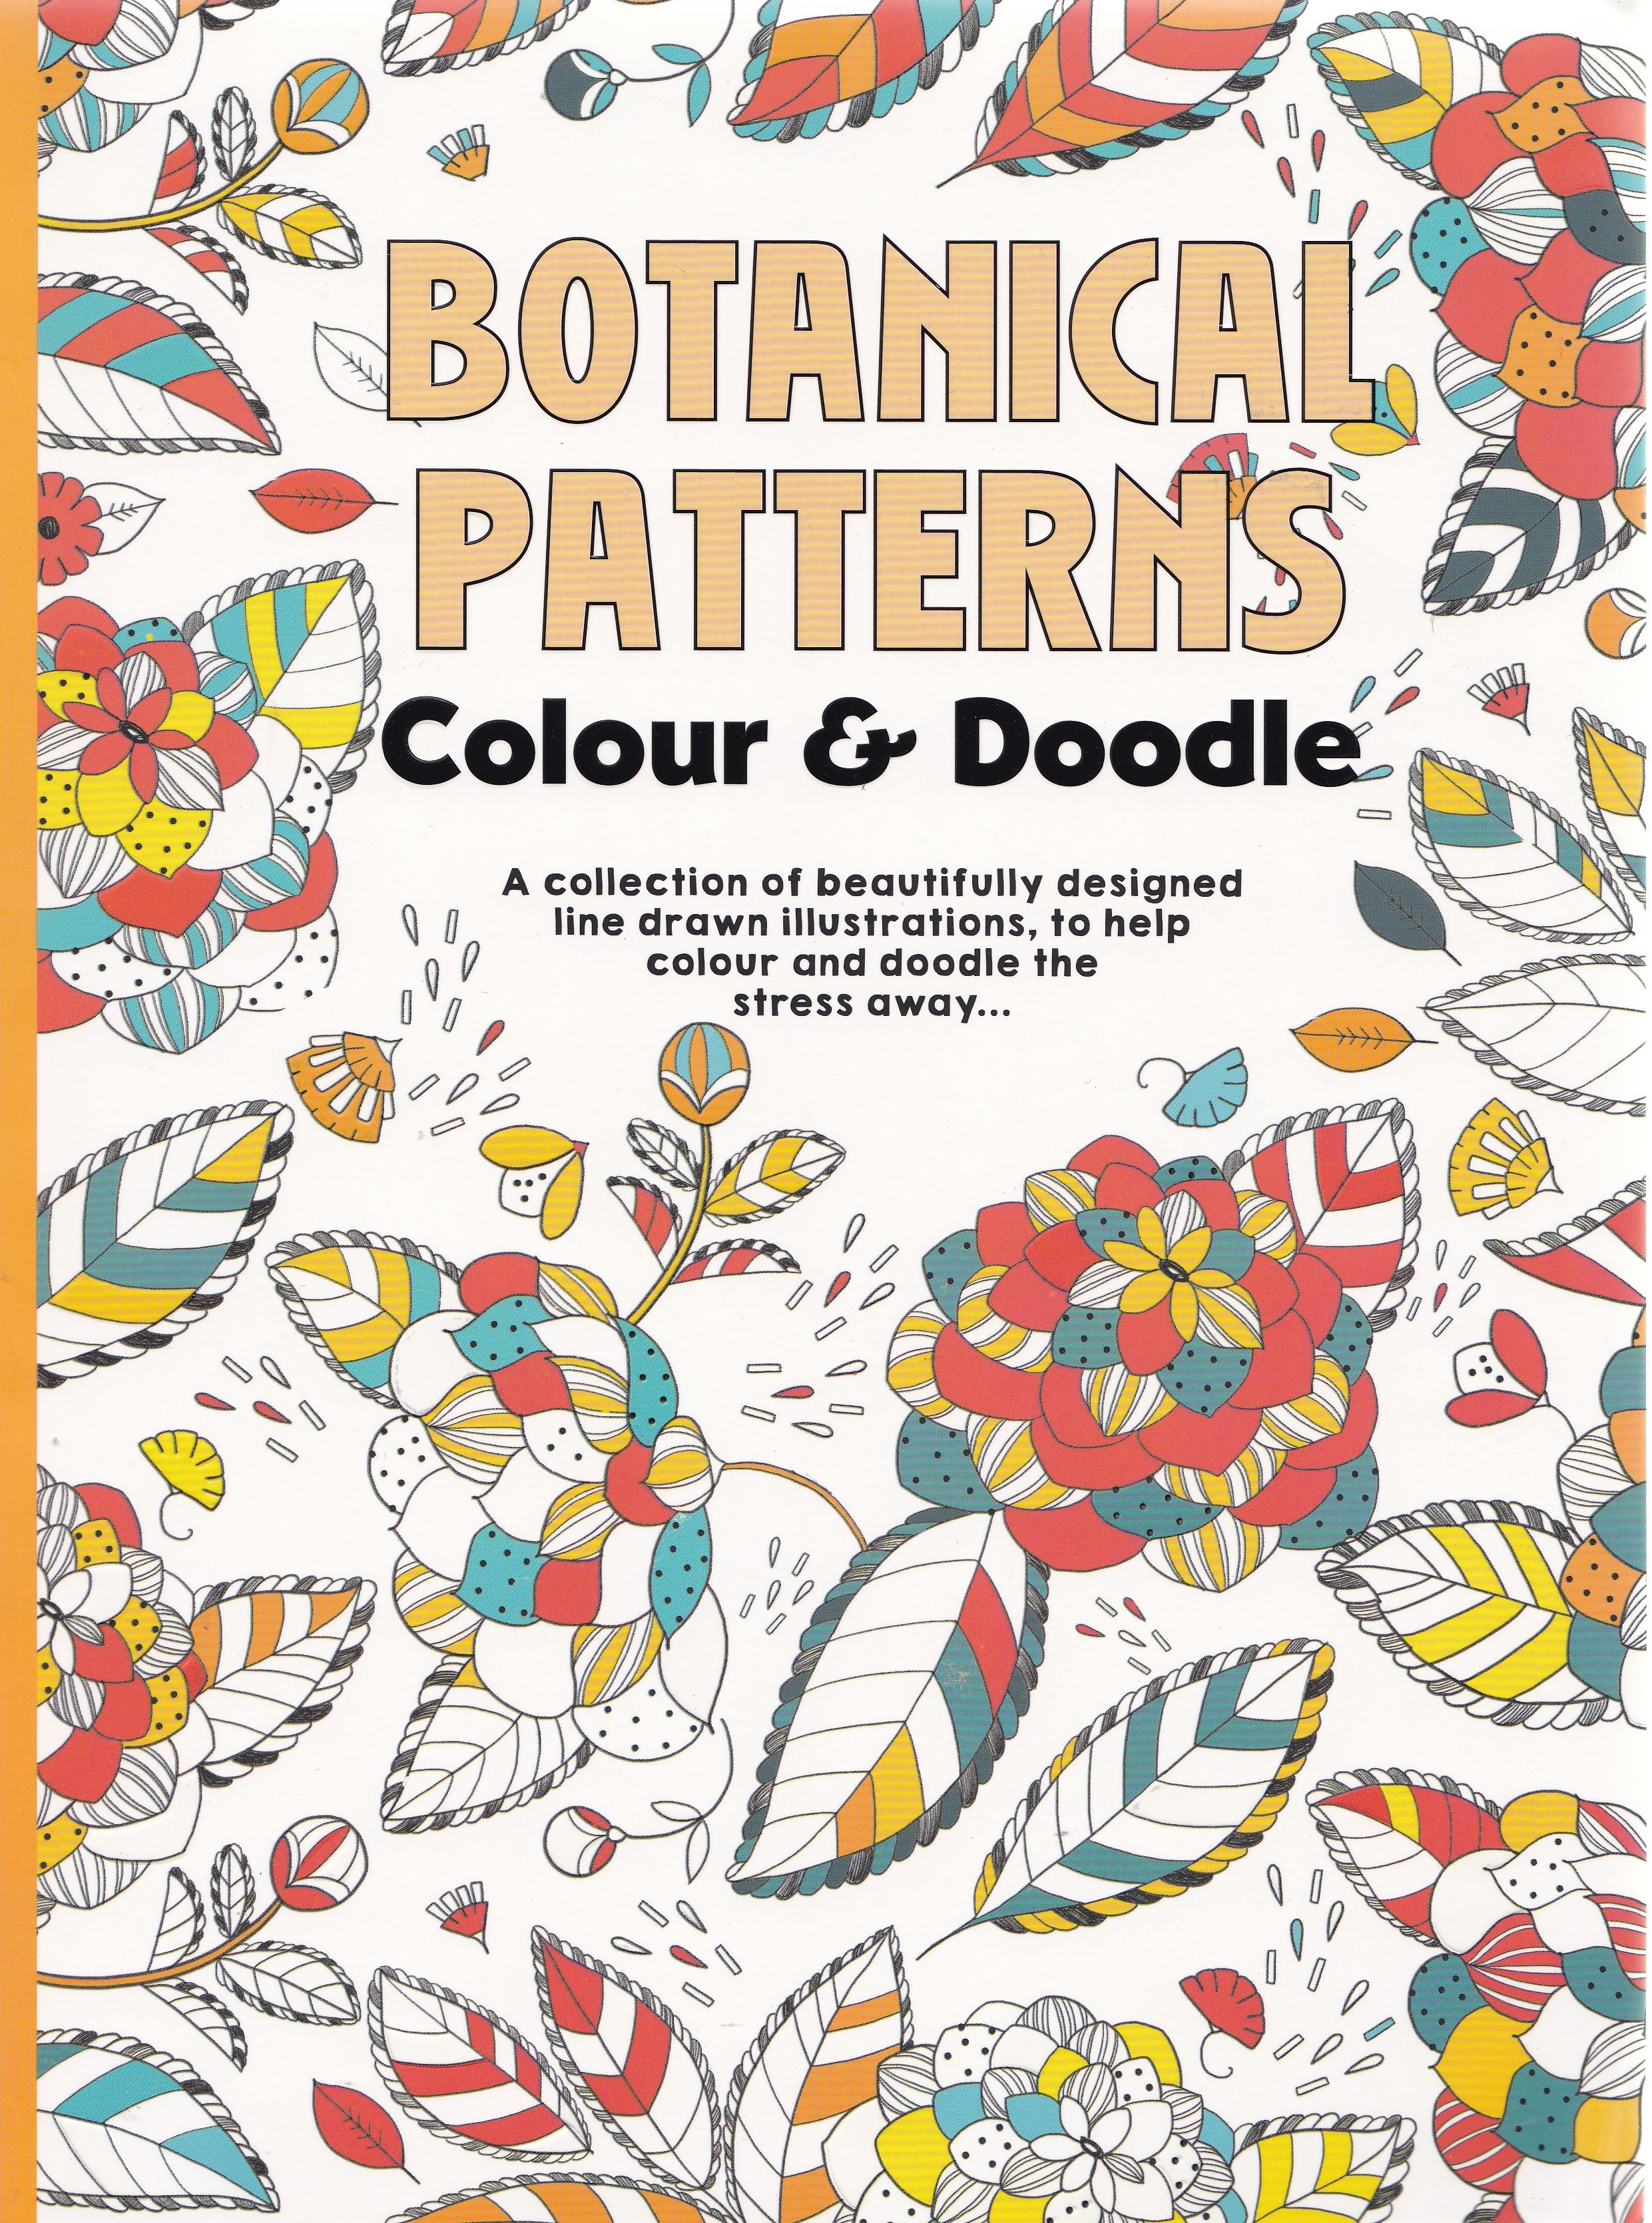 Colour Therapy, Botanical patterns. Carte de colorat antistress, Modele Botanice